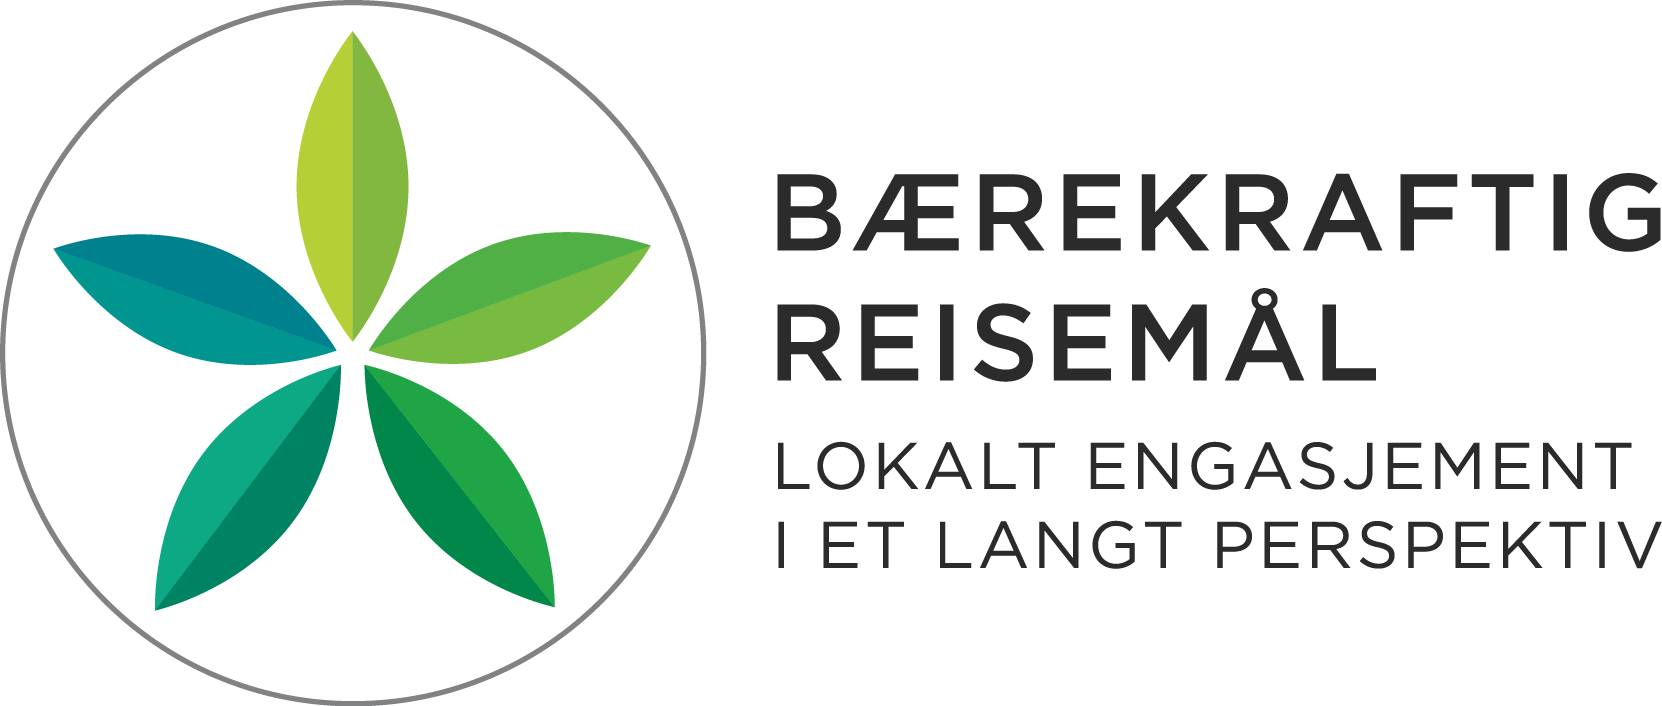 Sustainable Destination logo